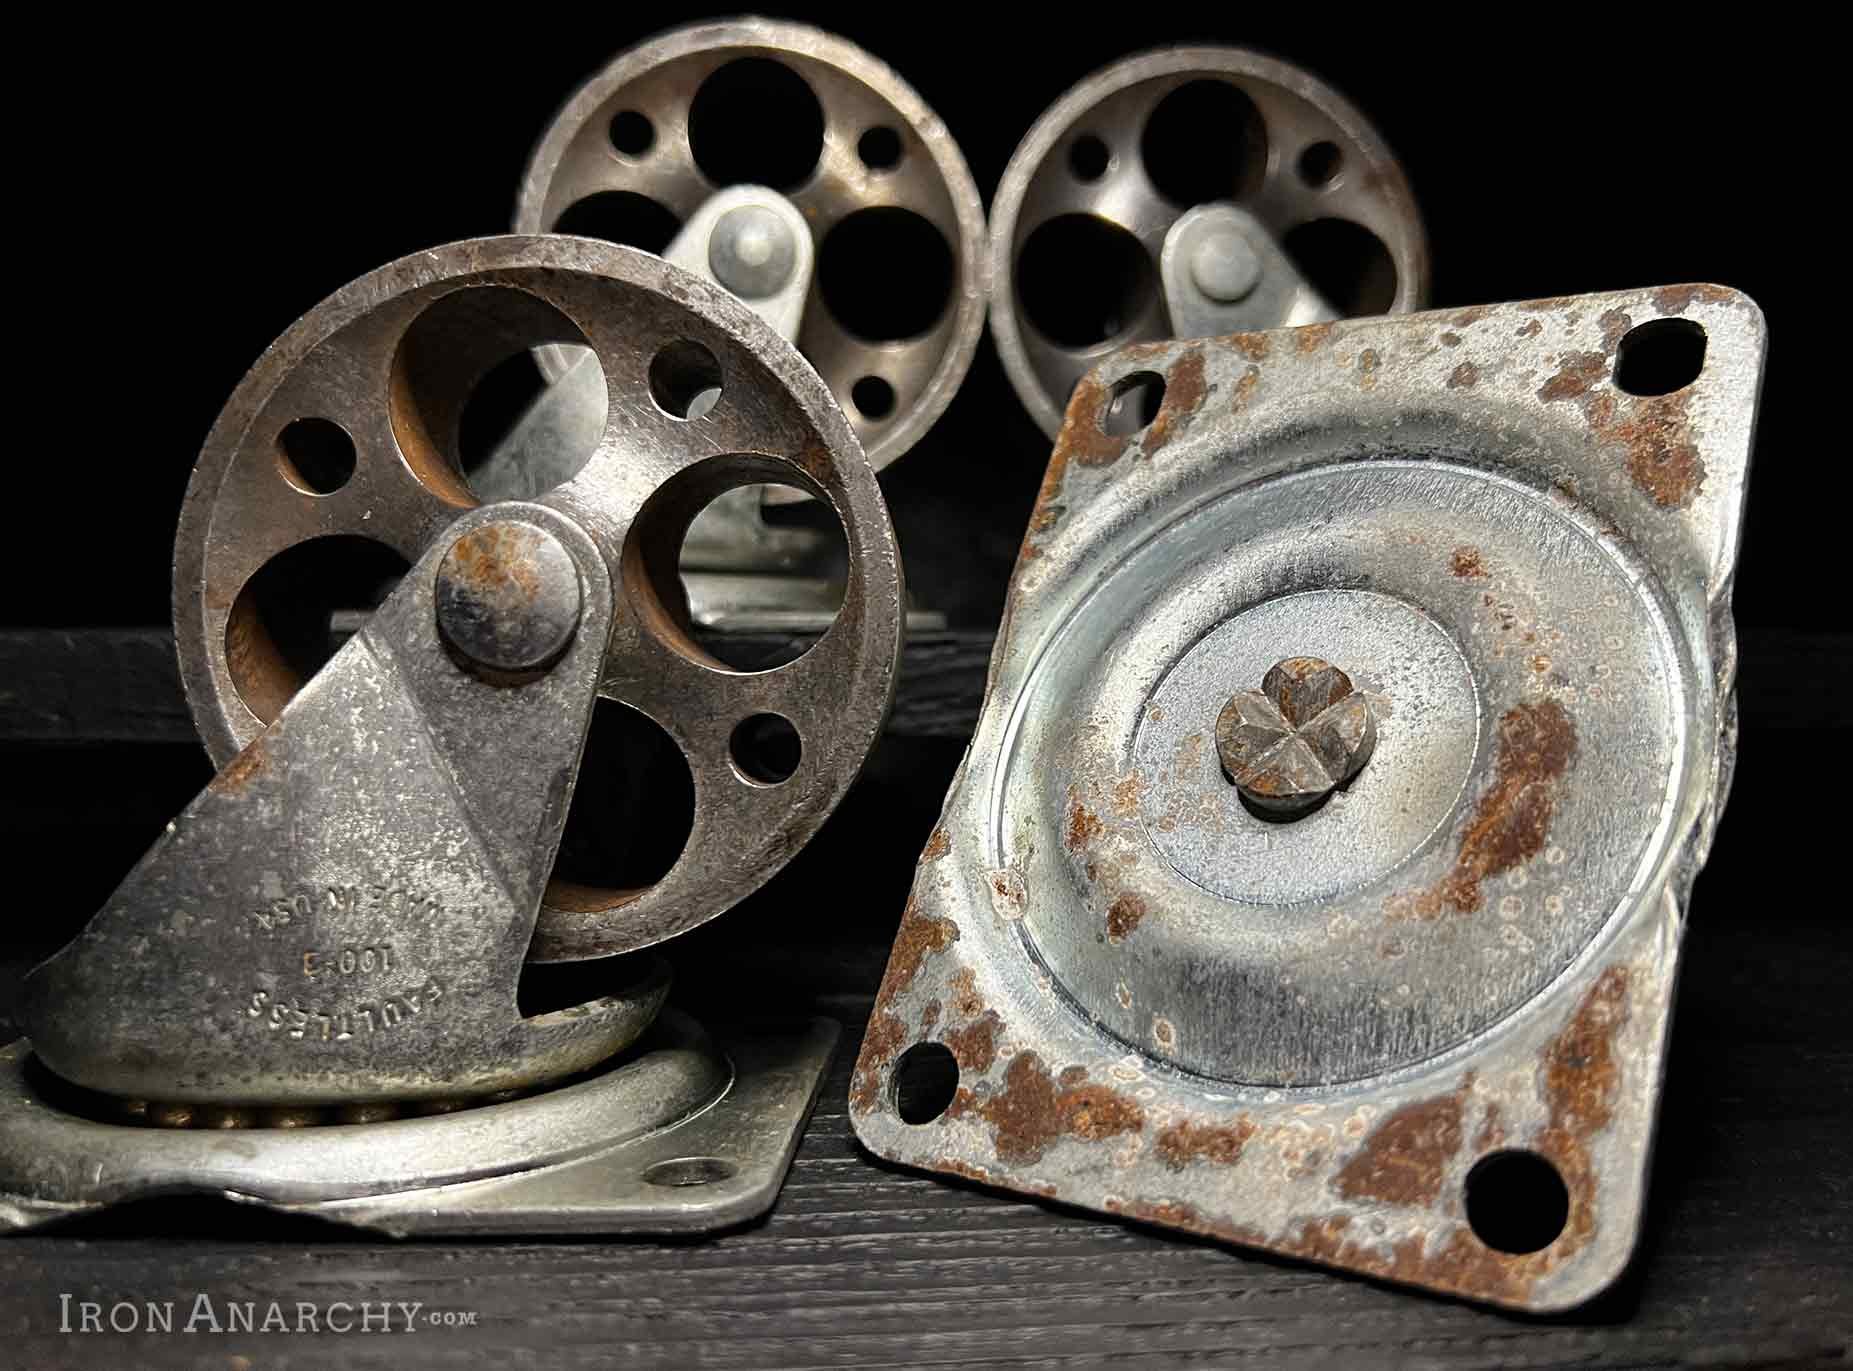 SEO Title: Antique Industrial Casters, Vintage Industrial Caster Wheels